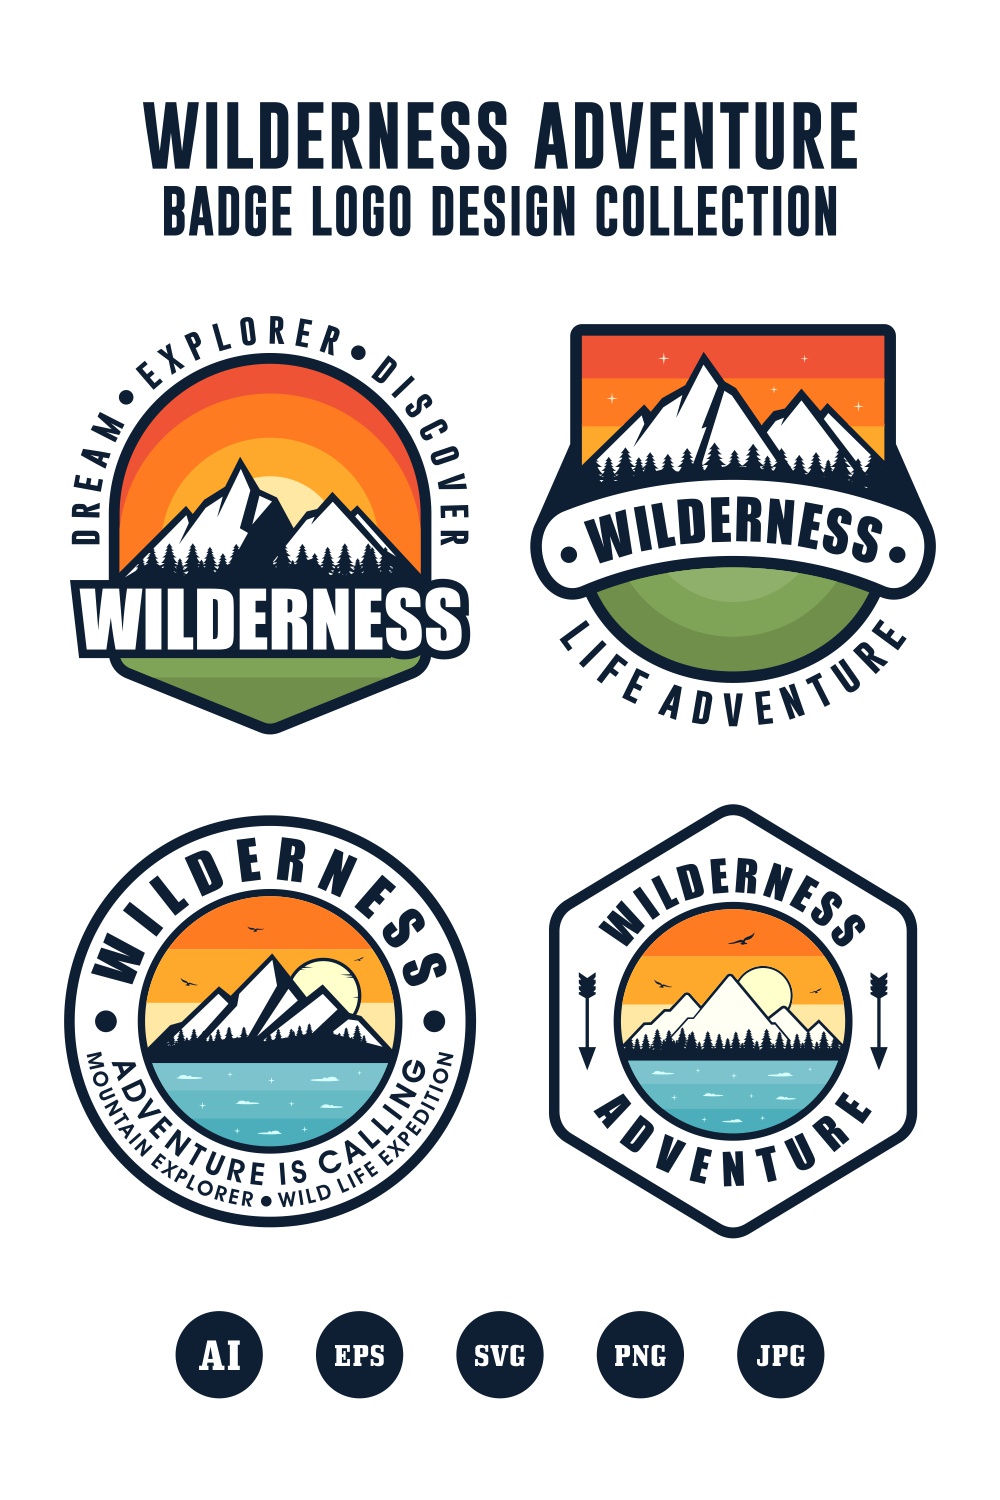 Set Wilderness adventure design logo collection - $5 pinterest preview image.